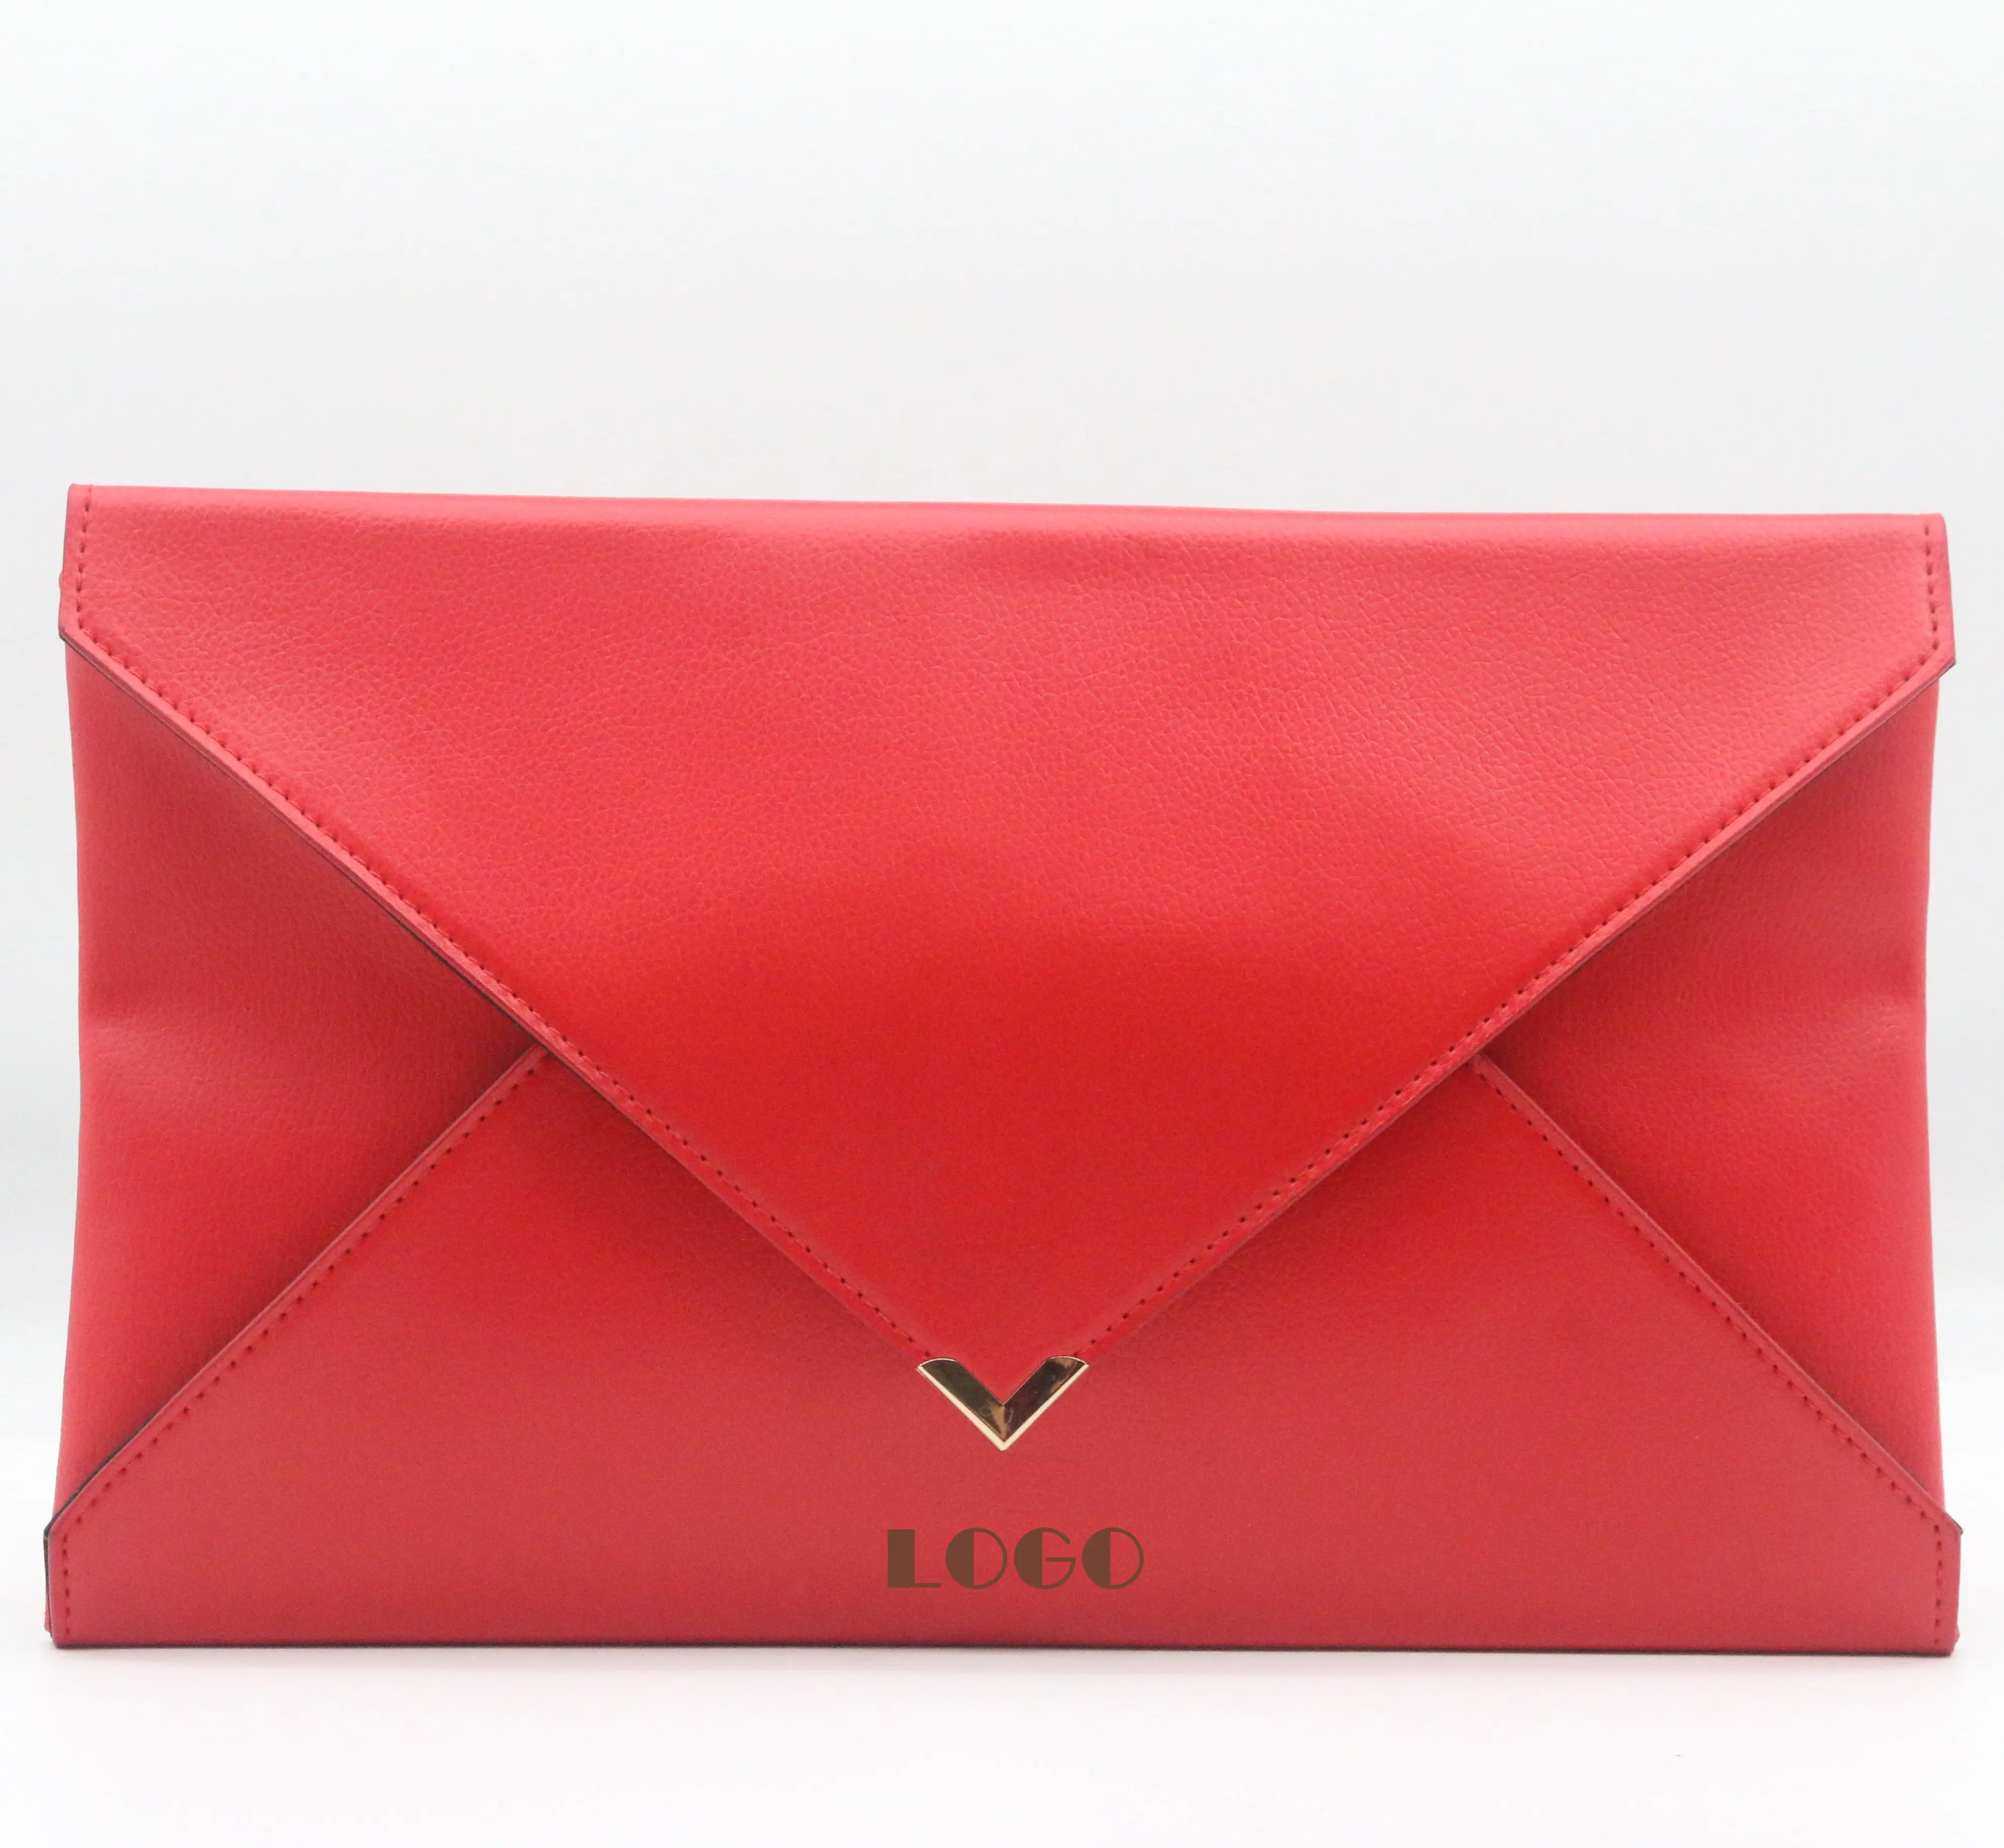 Chic Poinciana Red Lady Clutch Purse Quality PU Leather Clutch Bag Envelope Shape Evening Handbag